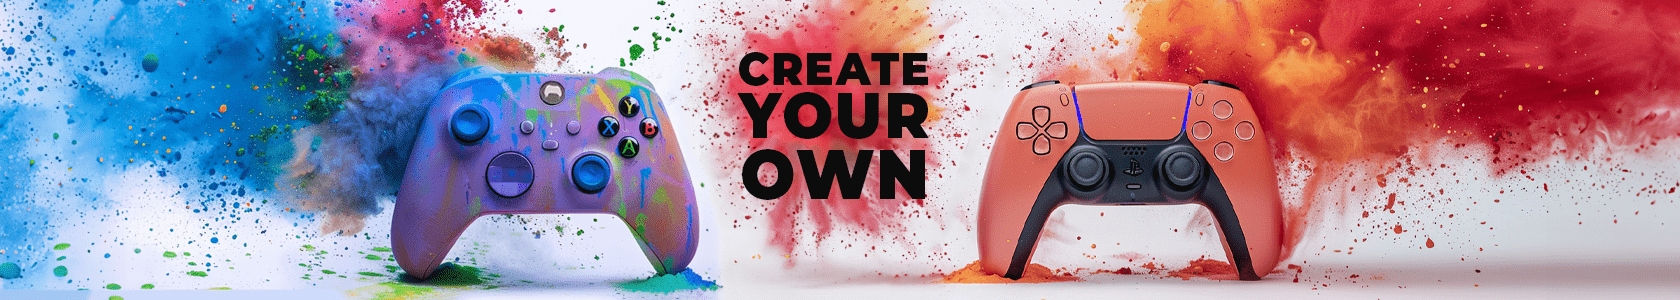 Create Your Own Desktop